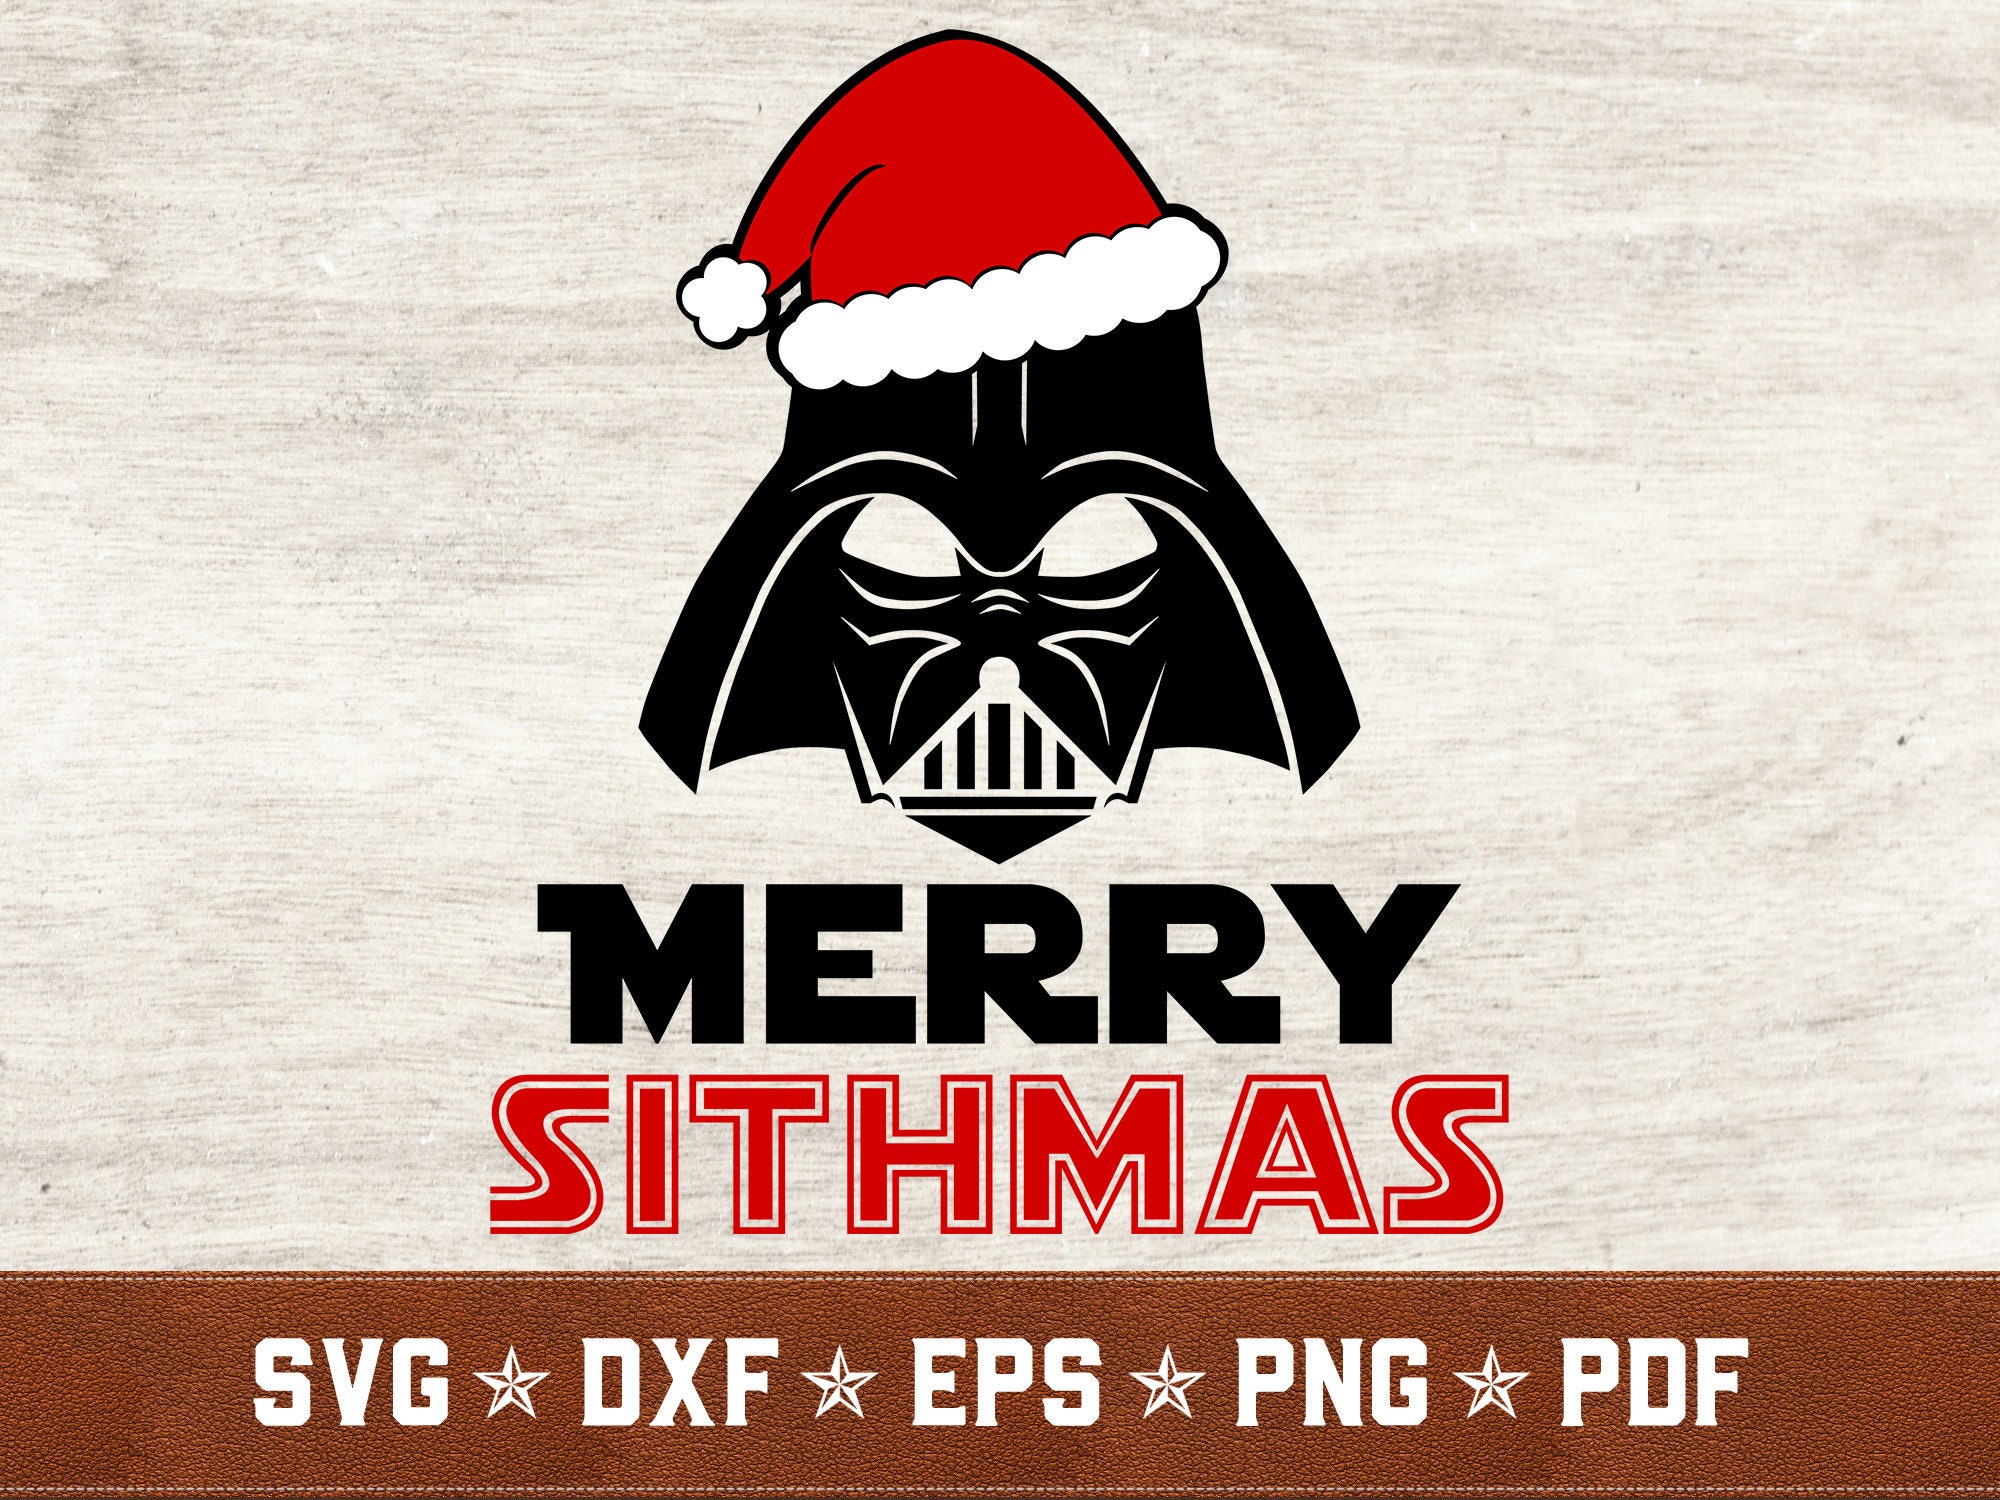 Disney Star Wars Merry Sithmas Darth Vader Jumbo 20 oz. Christmas